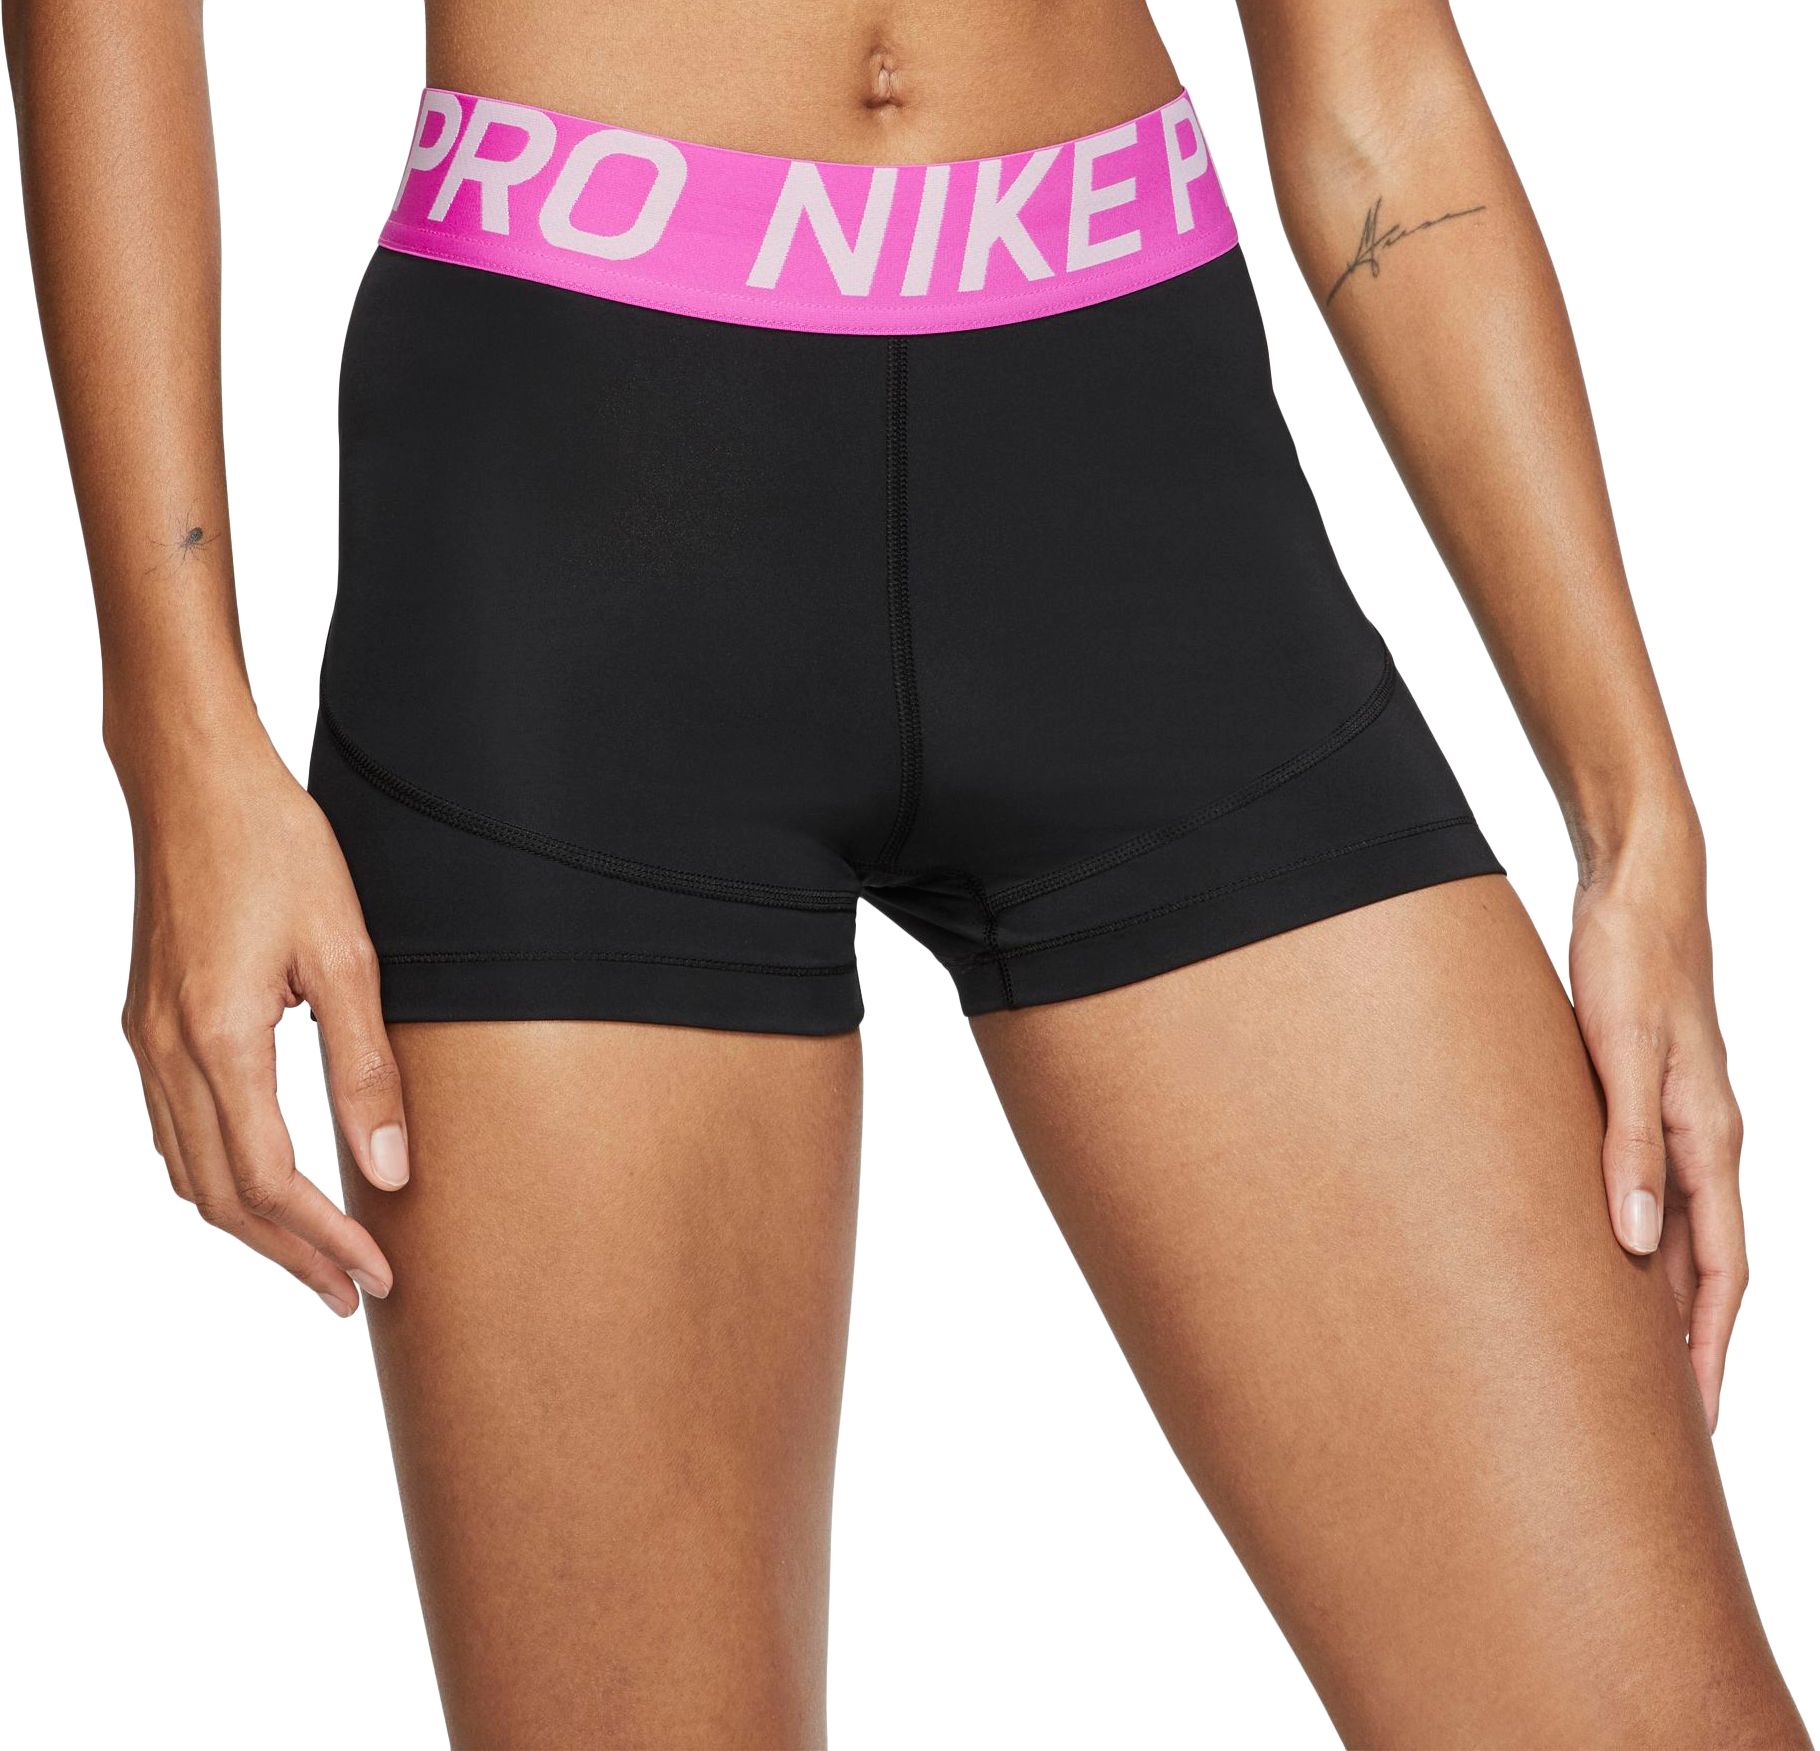 black nike pro shorts with pink band